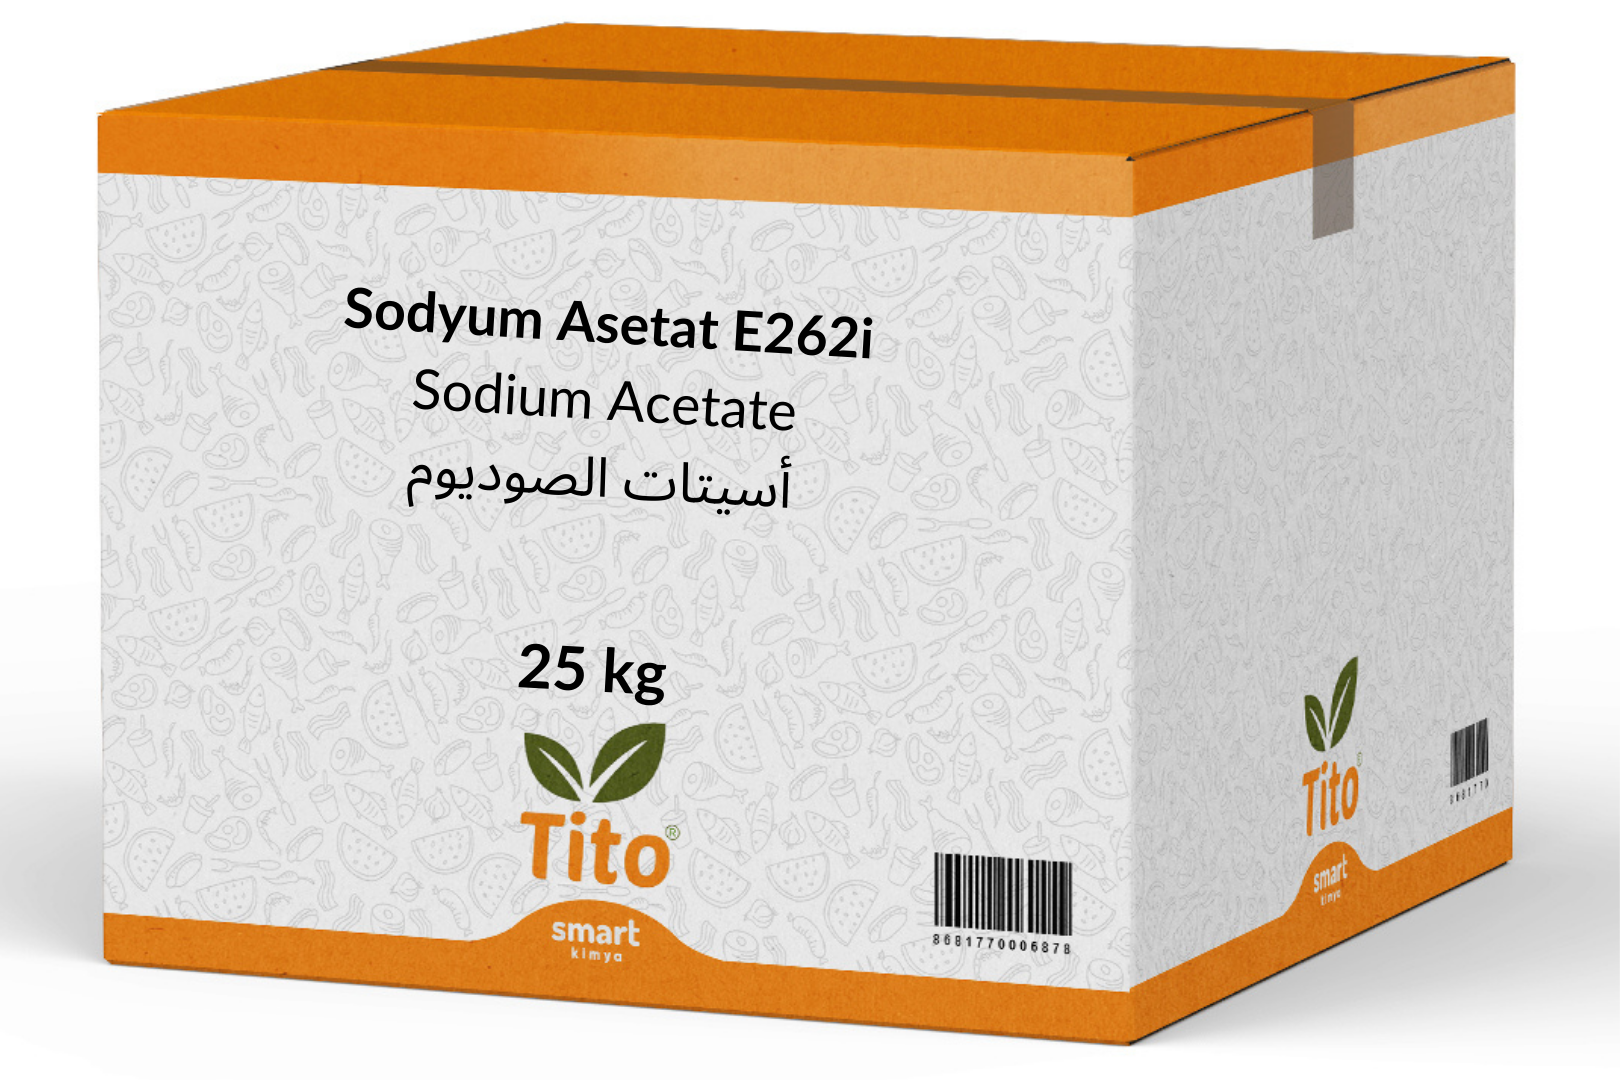 Sodyum Asetat E262i 25 kg